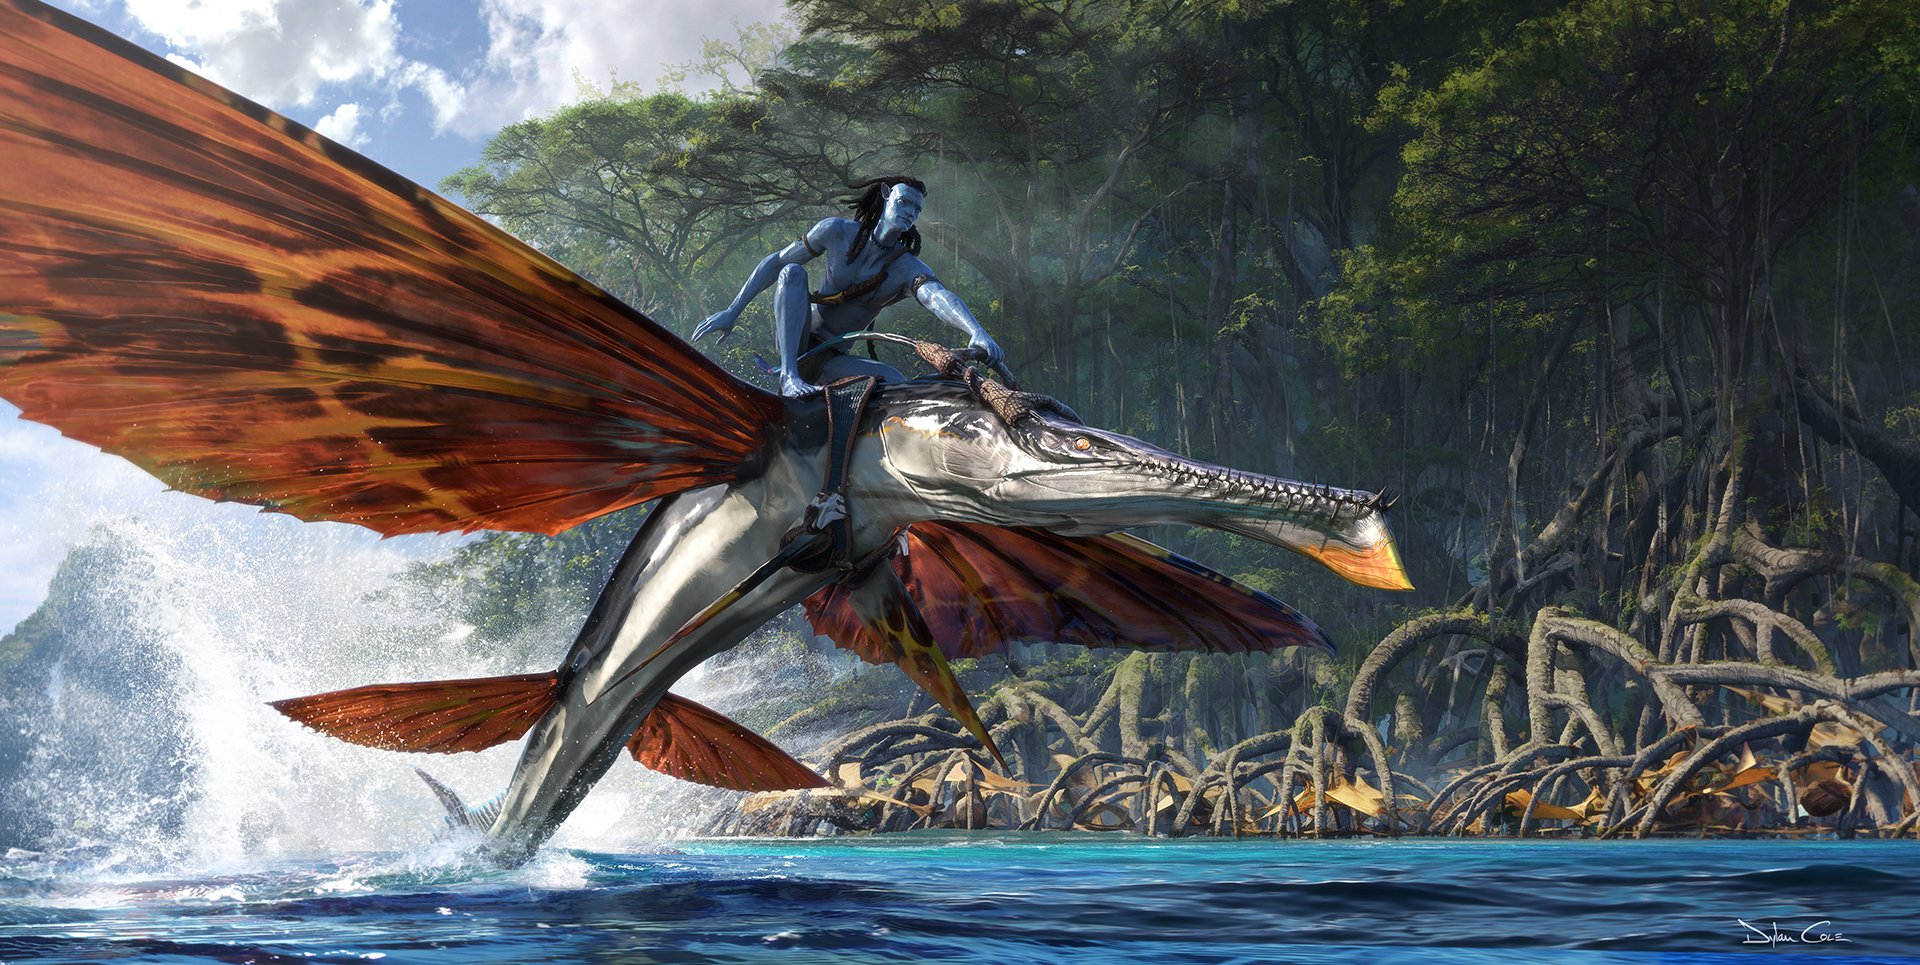 Avatar: Way Of Water Concept Art Shows Off Pandora's Killer Shark In Detail